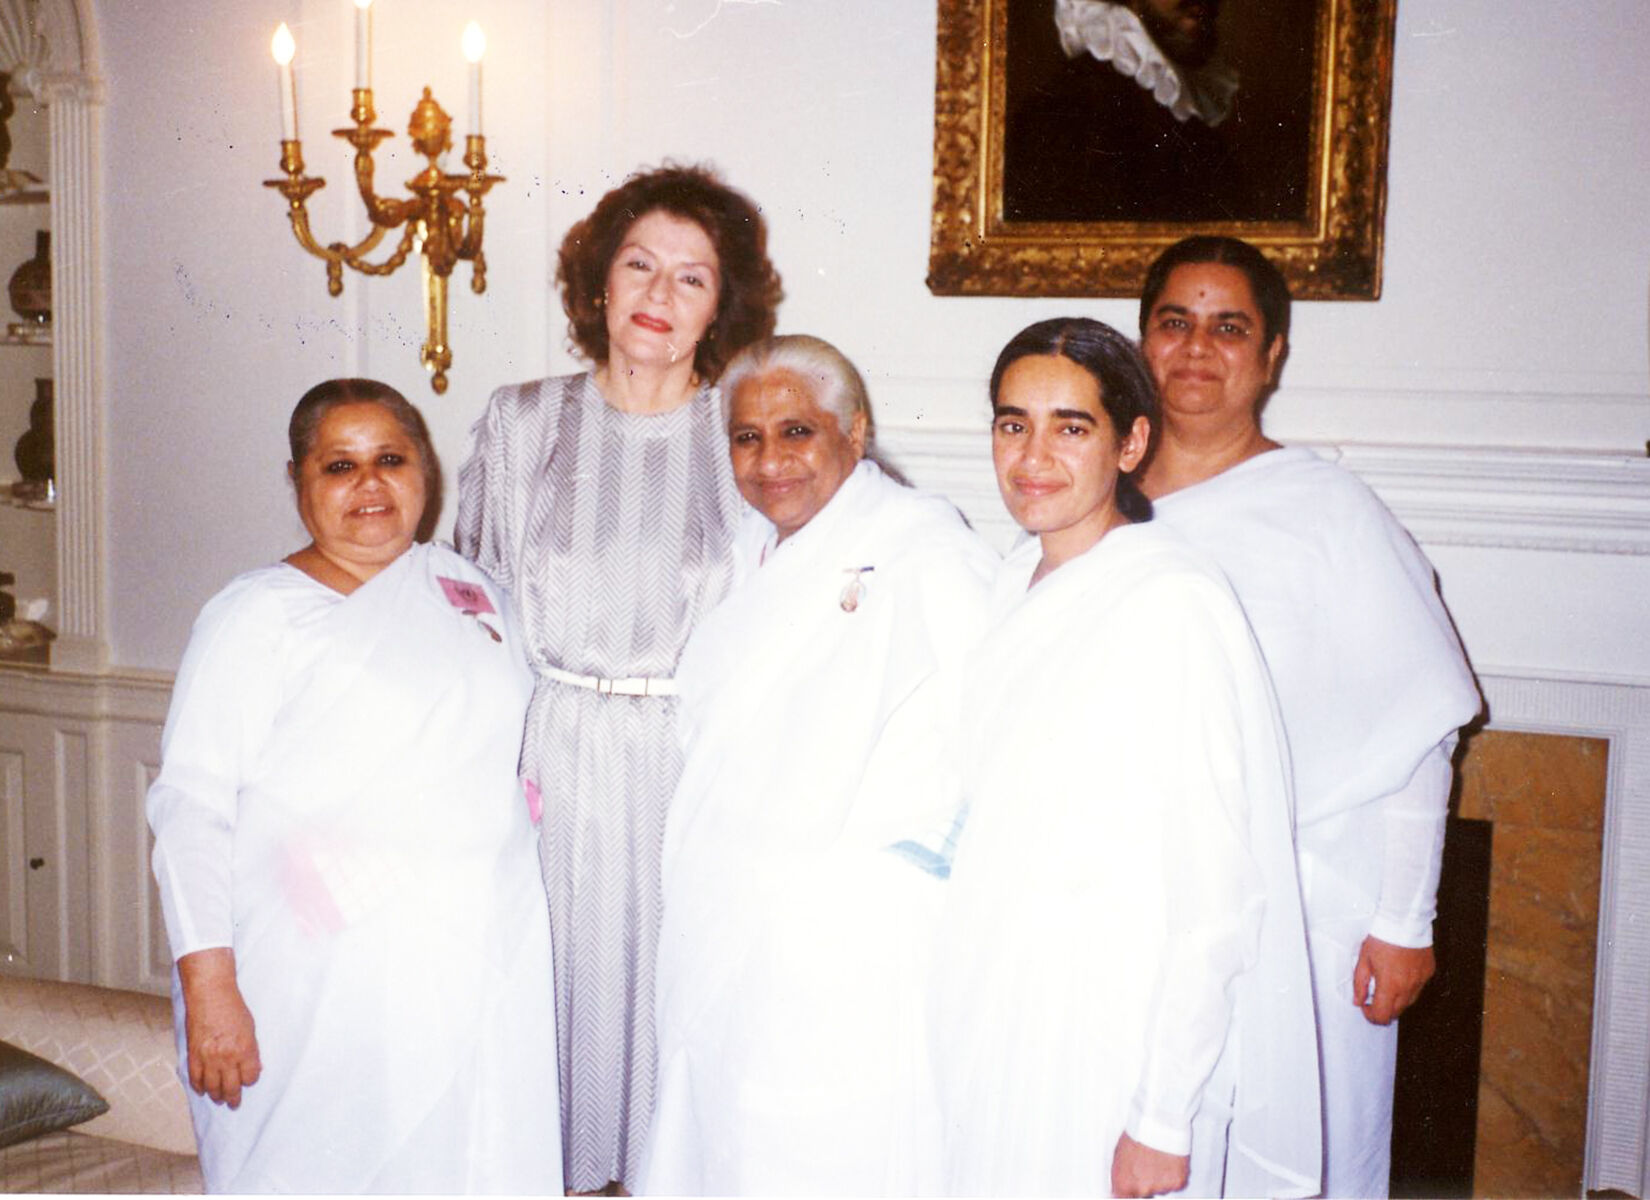 With Mrs Marcela Perez de Cuéllar, wife of the former UN Secretary-General, 1986